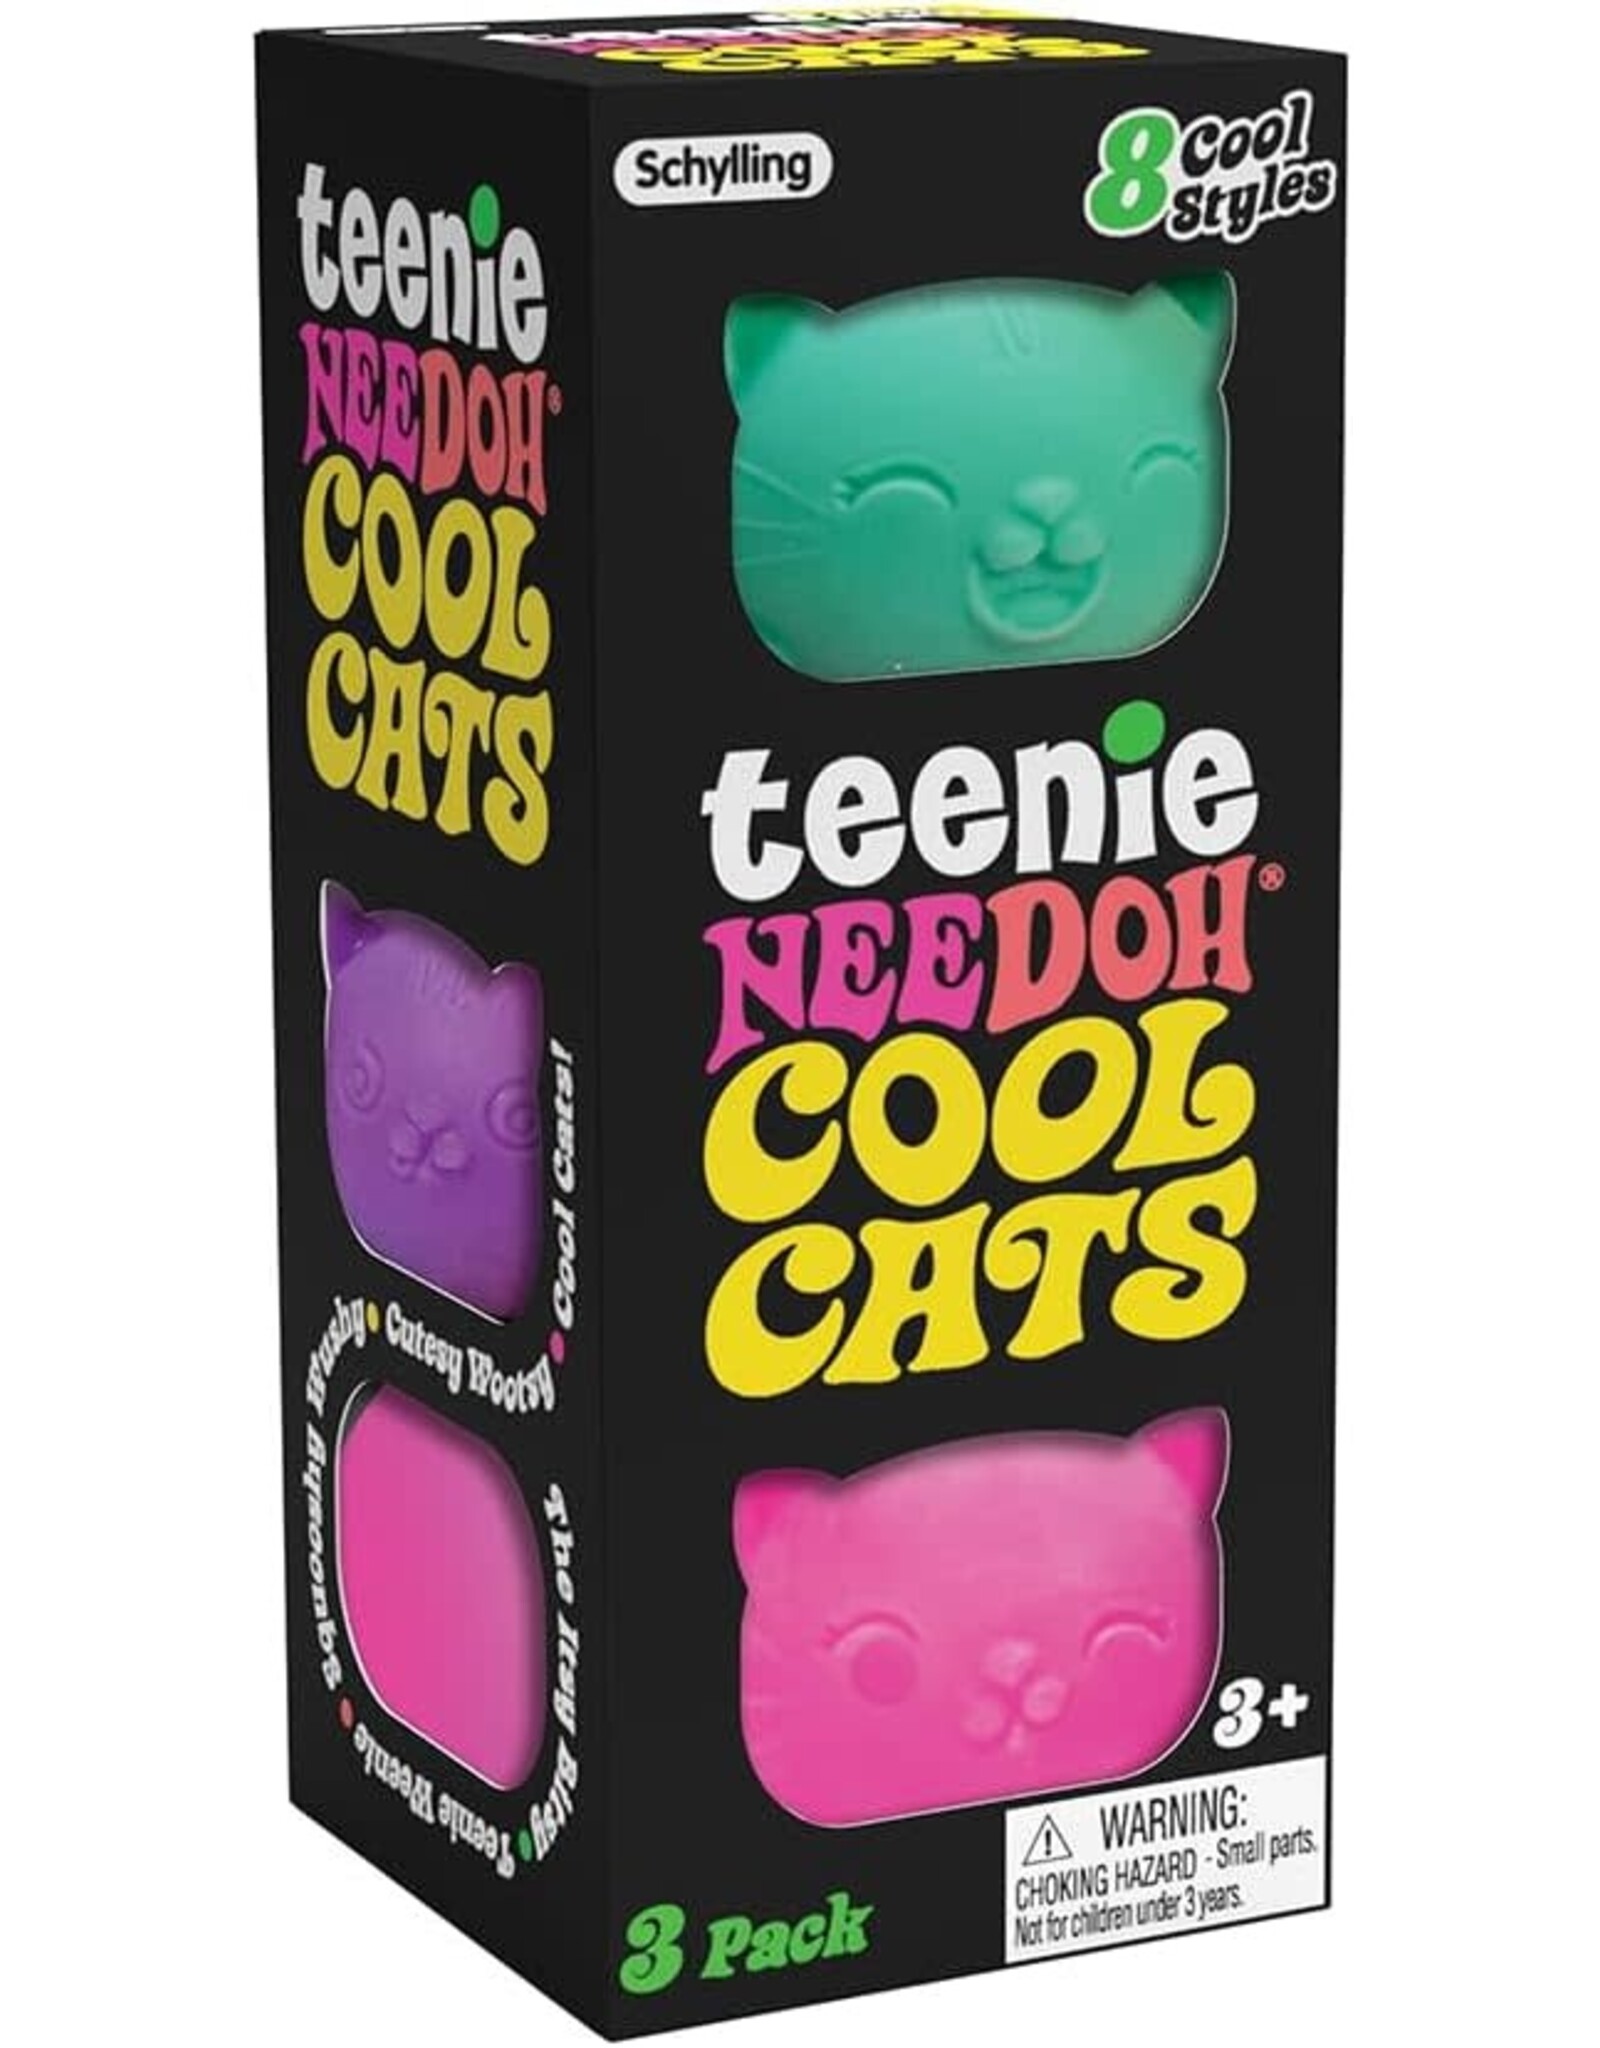 Teenie NeeDoh Cool Cats